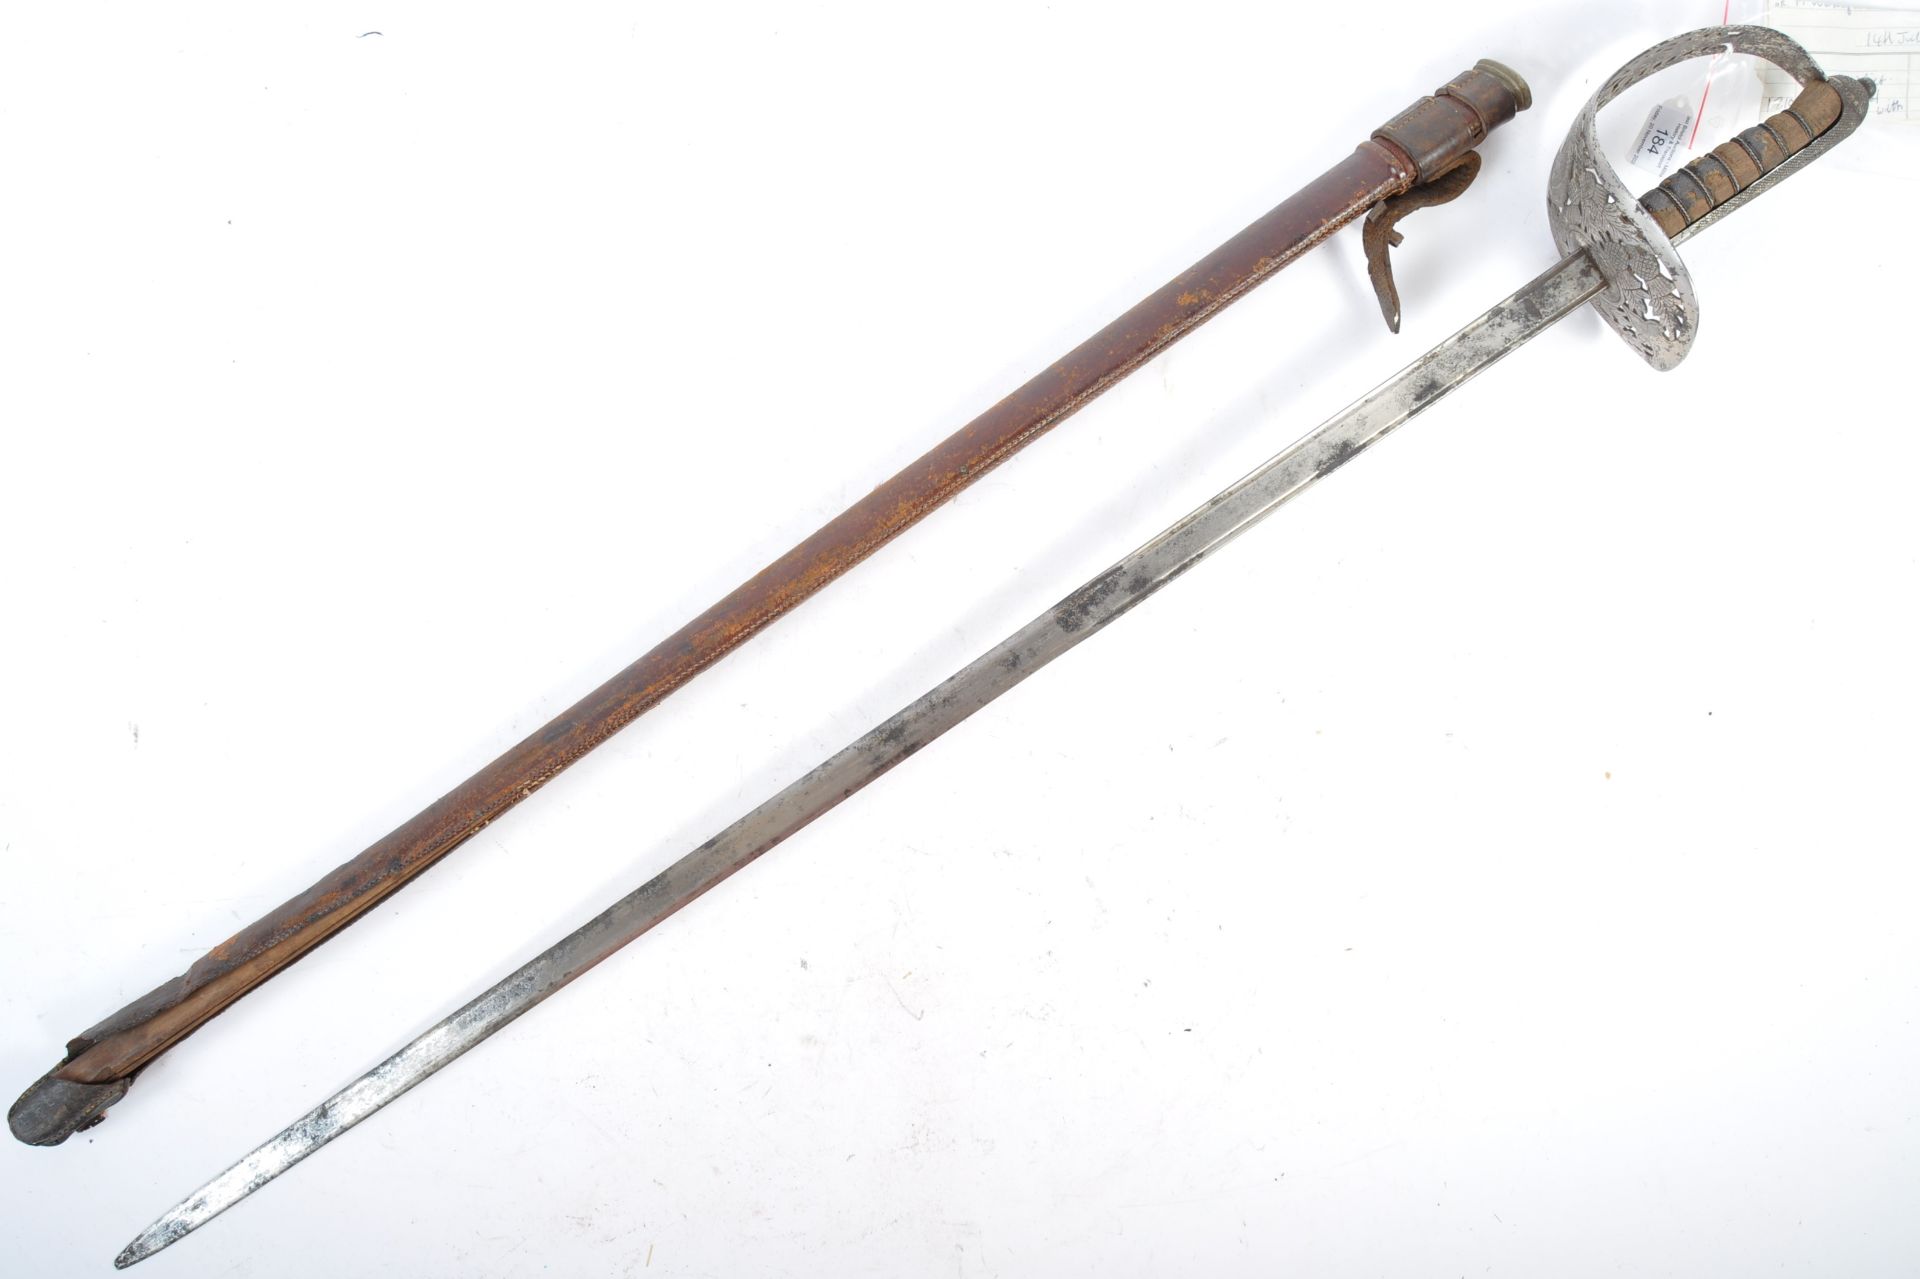 UNUSUAL 19TH CENTURY SCOTTISH OFFICERS SWORD WITH TOLEDO BLADE